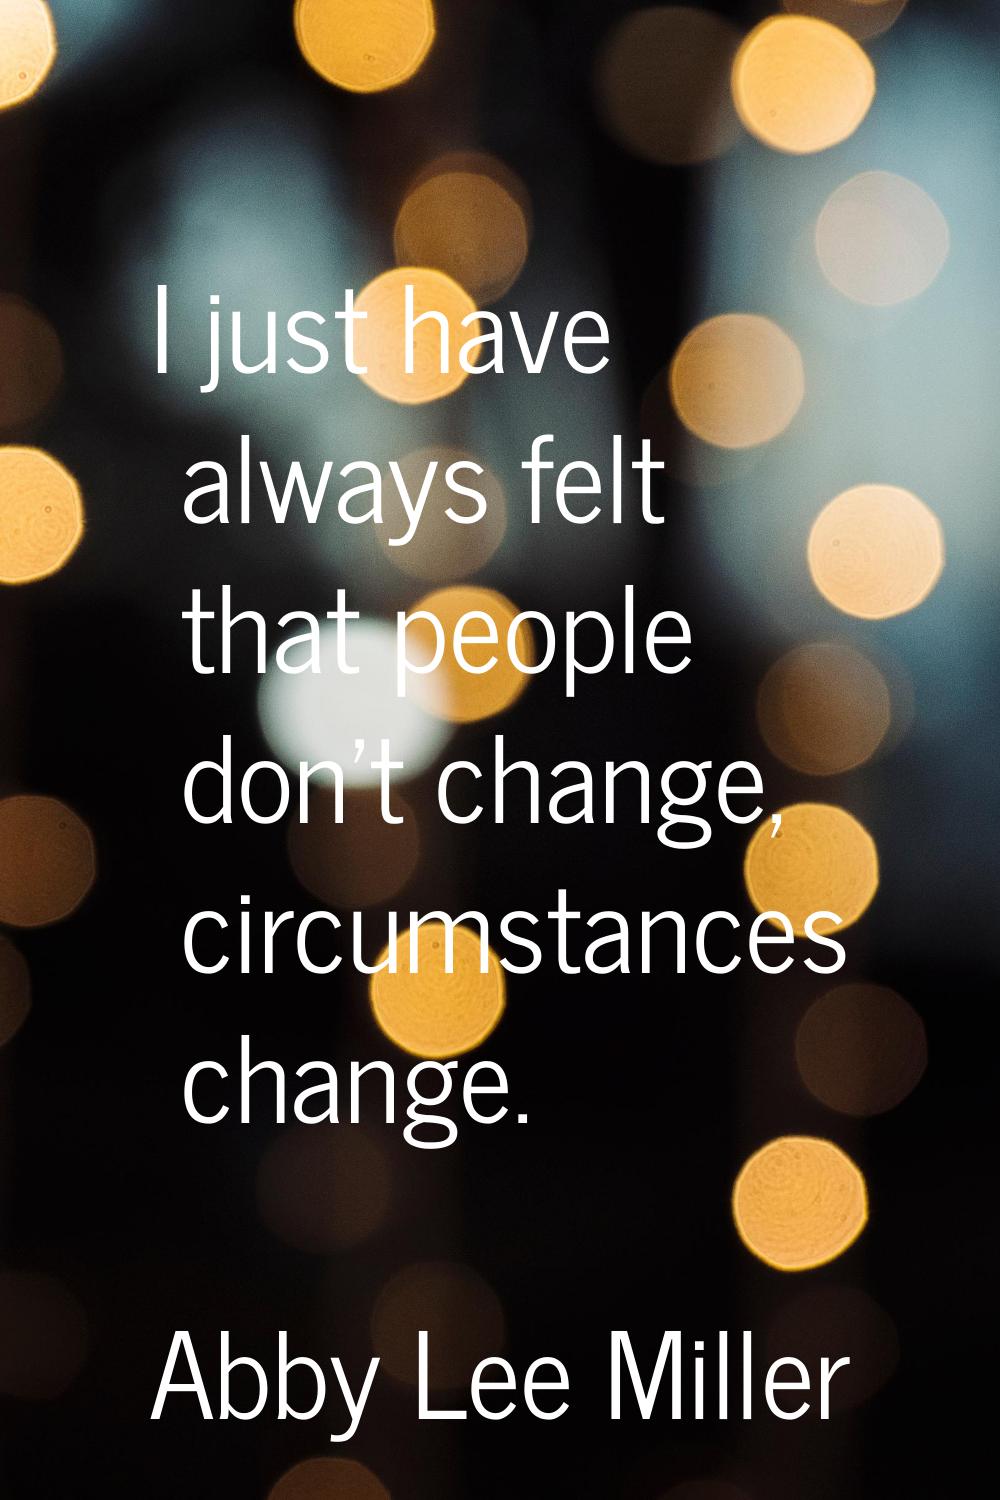 I just have always felt that people don't change, circumstances change.